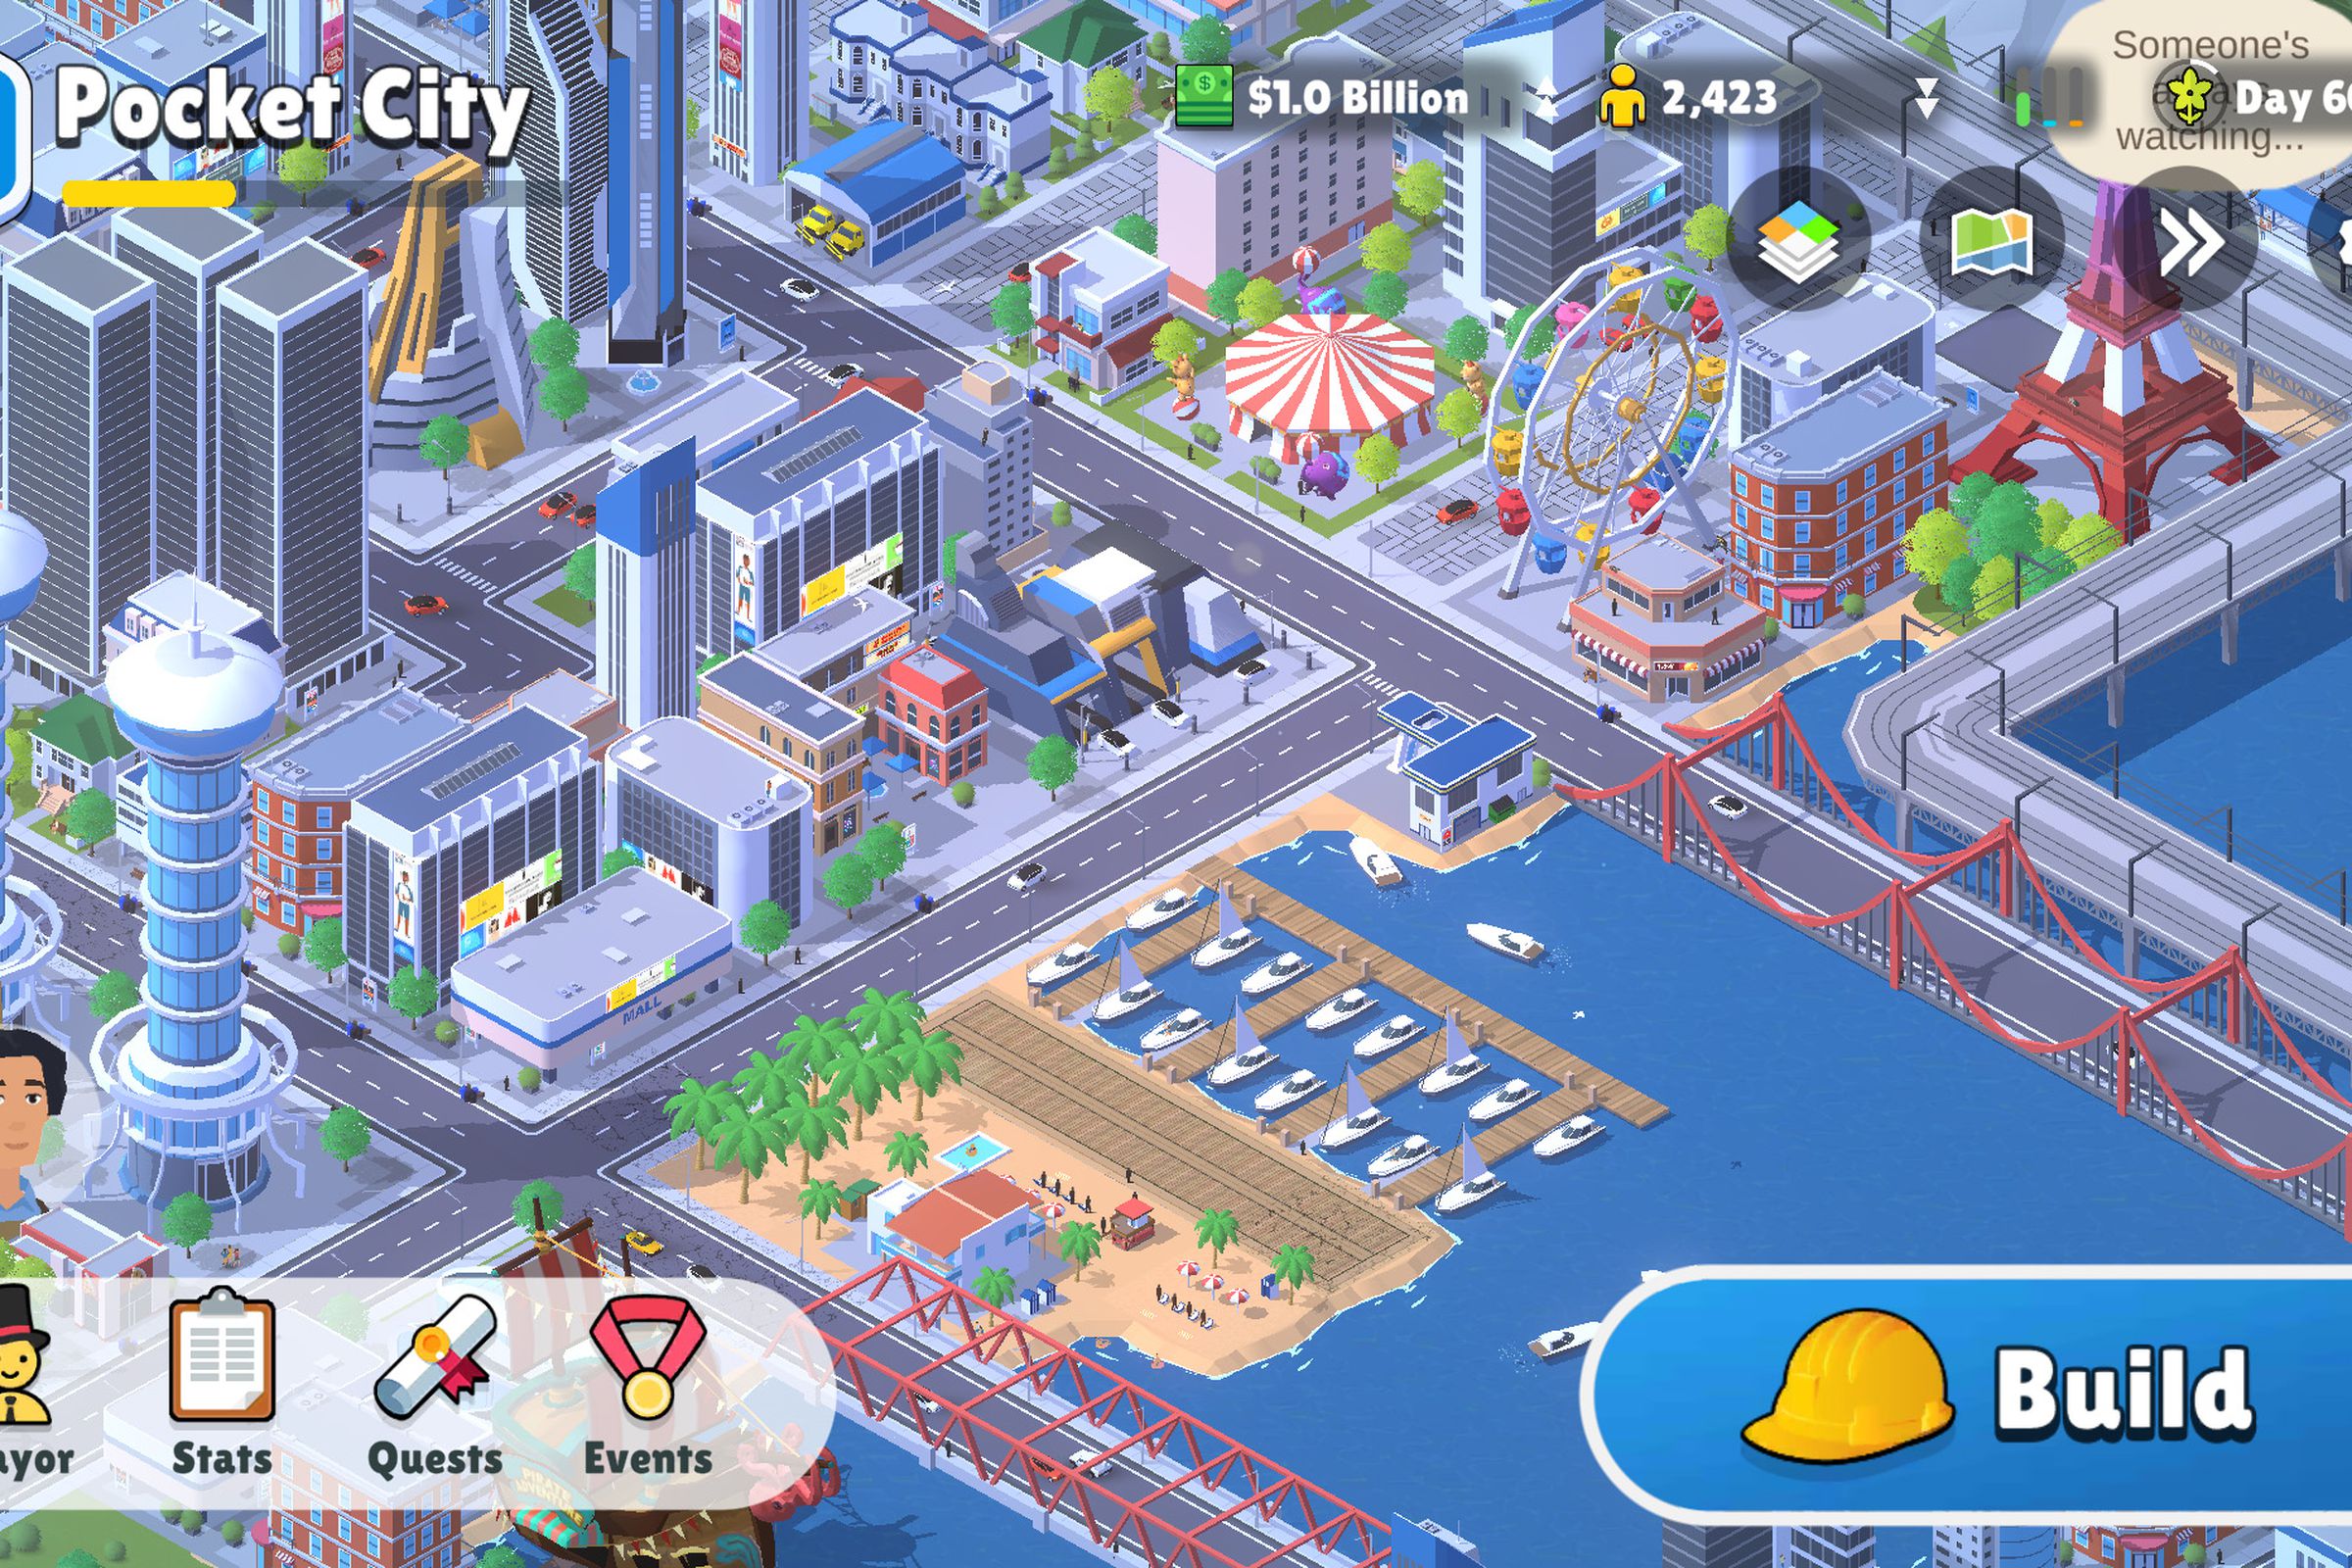 Screenshot of Pocket City 2 game showing buildings, an amusement park, and bridges.